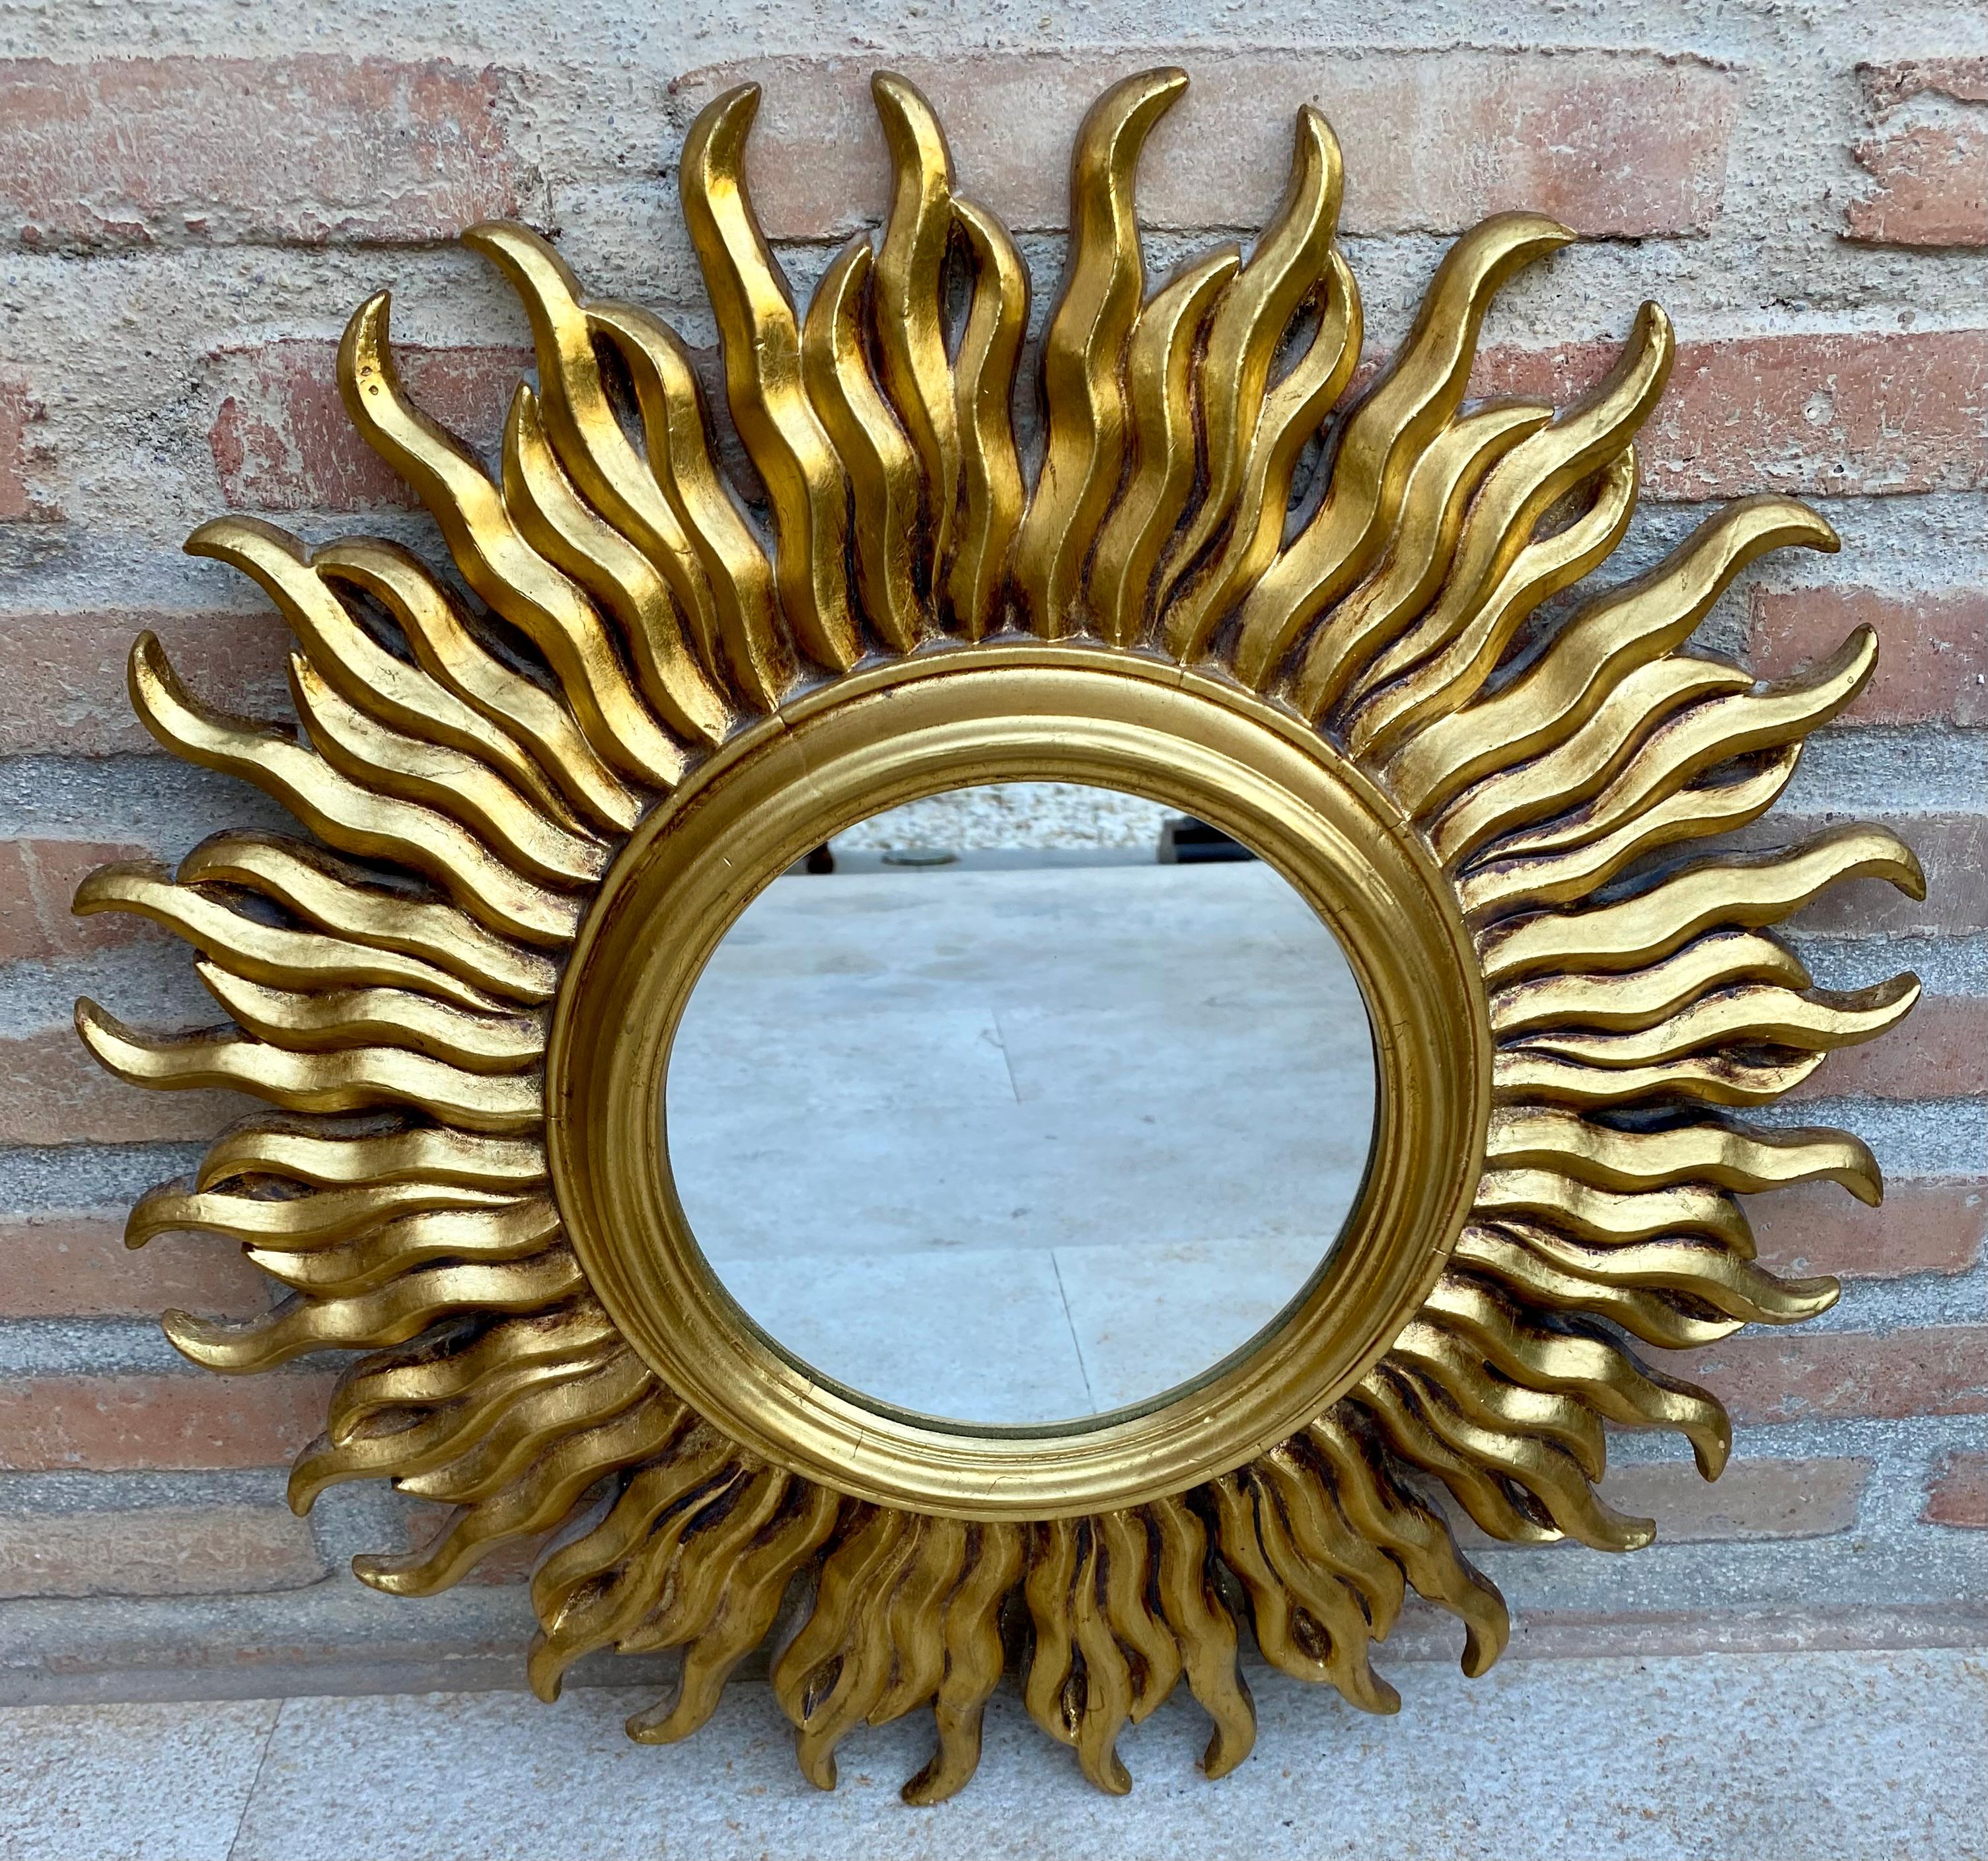 Mid 20Th French Century Sunburst Mirror in Gold.
Midcentury Tiered and Gilt Sunburst Mirror from France.